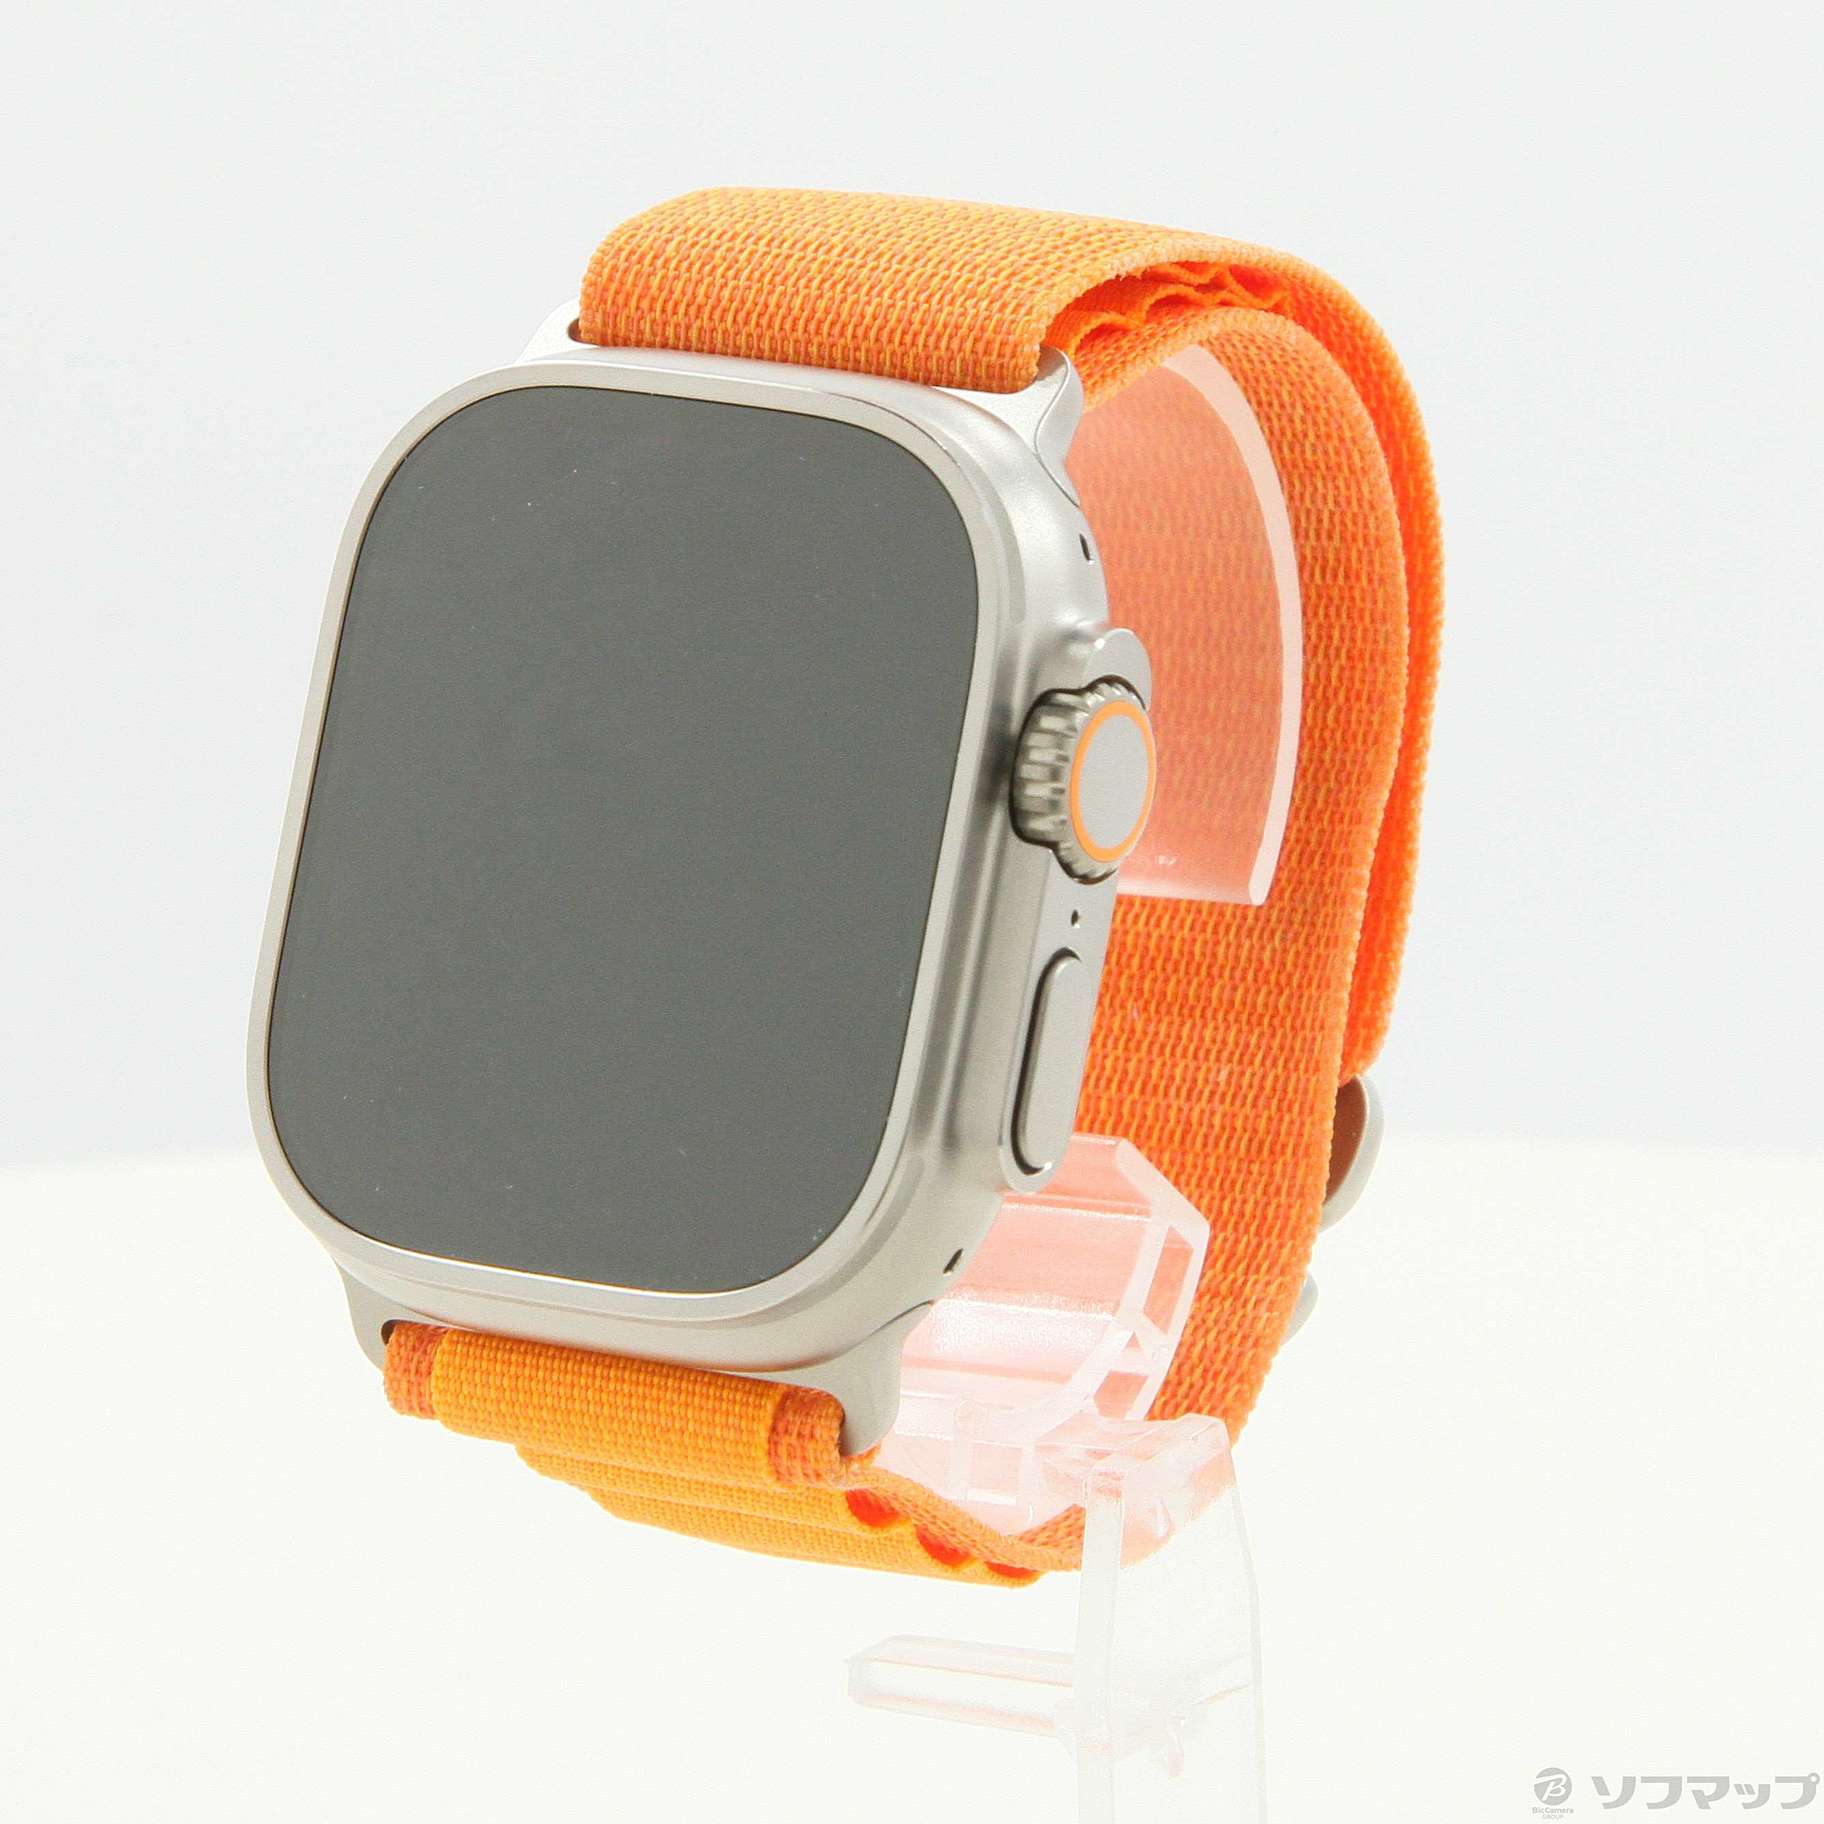 Apple Watch Ultra チタニウムケースとオレンジアルパインループ